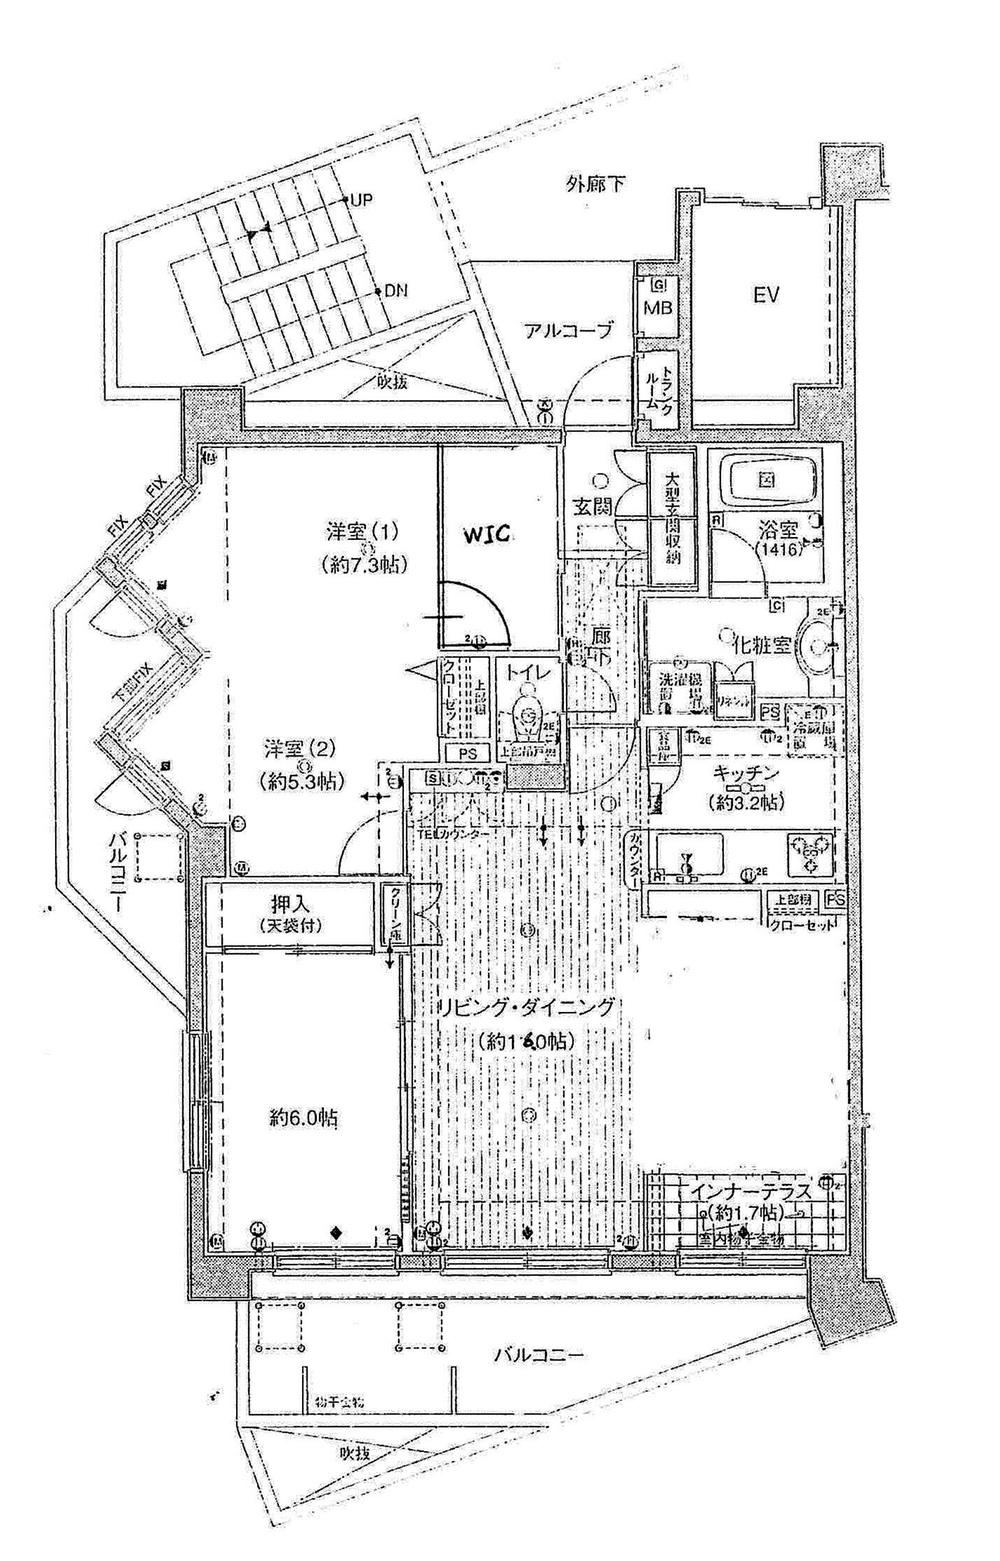 Floor plan. 2LDK, Price 19.5 million yen, Occupied area 82.25 sq m